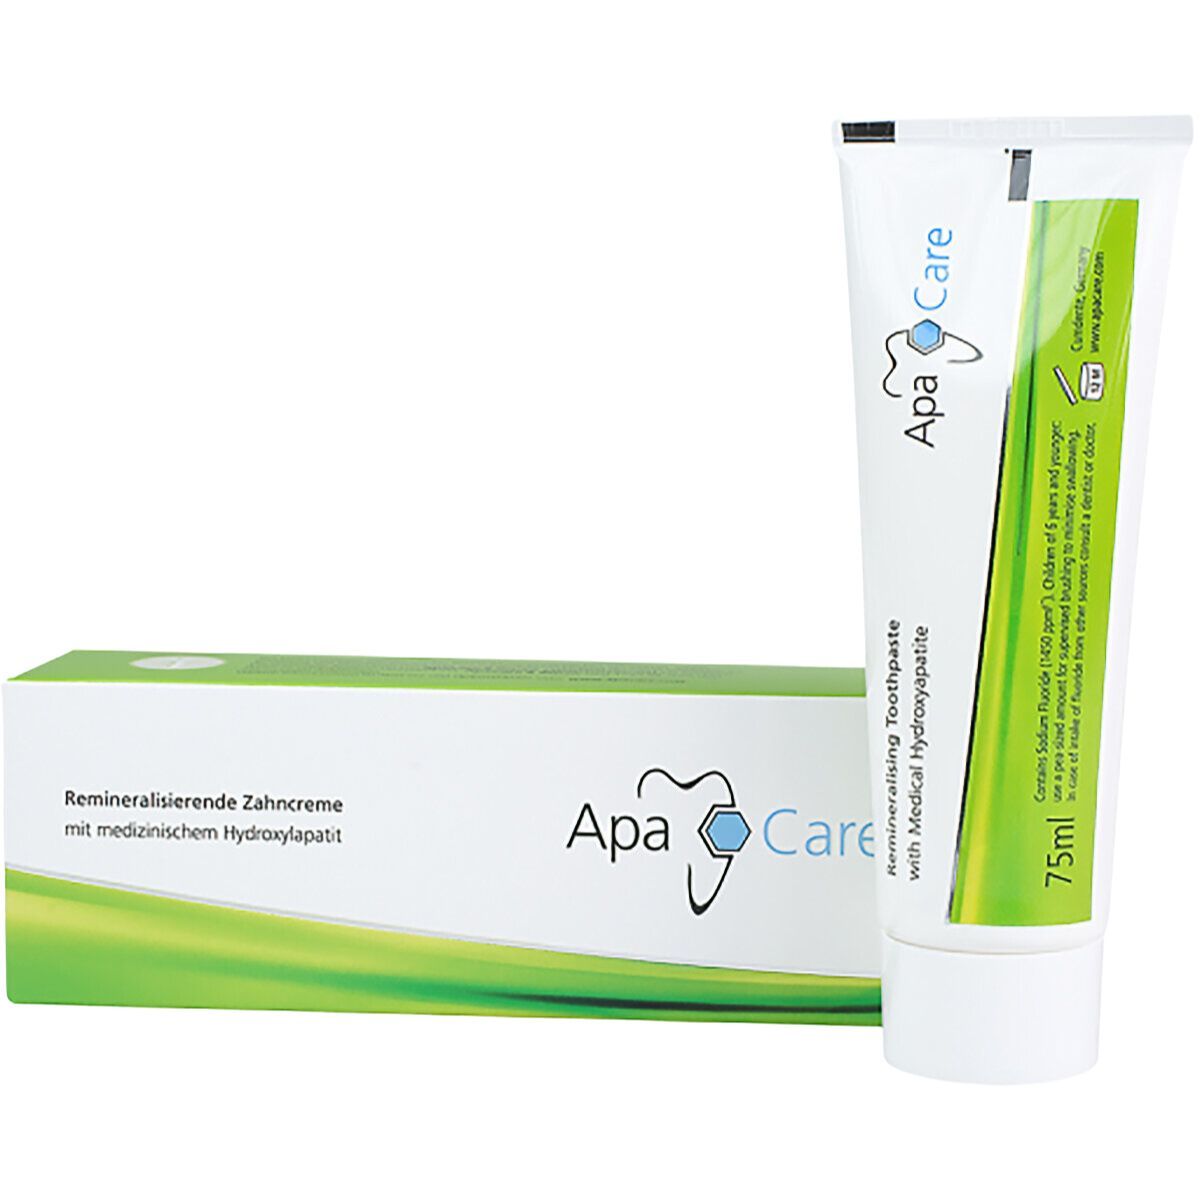 Apacare - Toothpaste pasta remineralizująca - 75ml - Sklep internetowy  Almamed